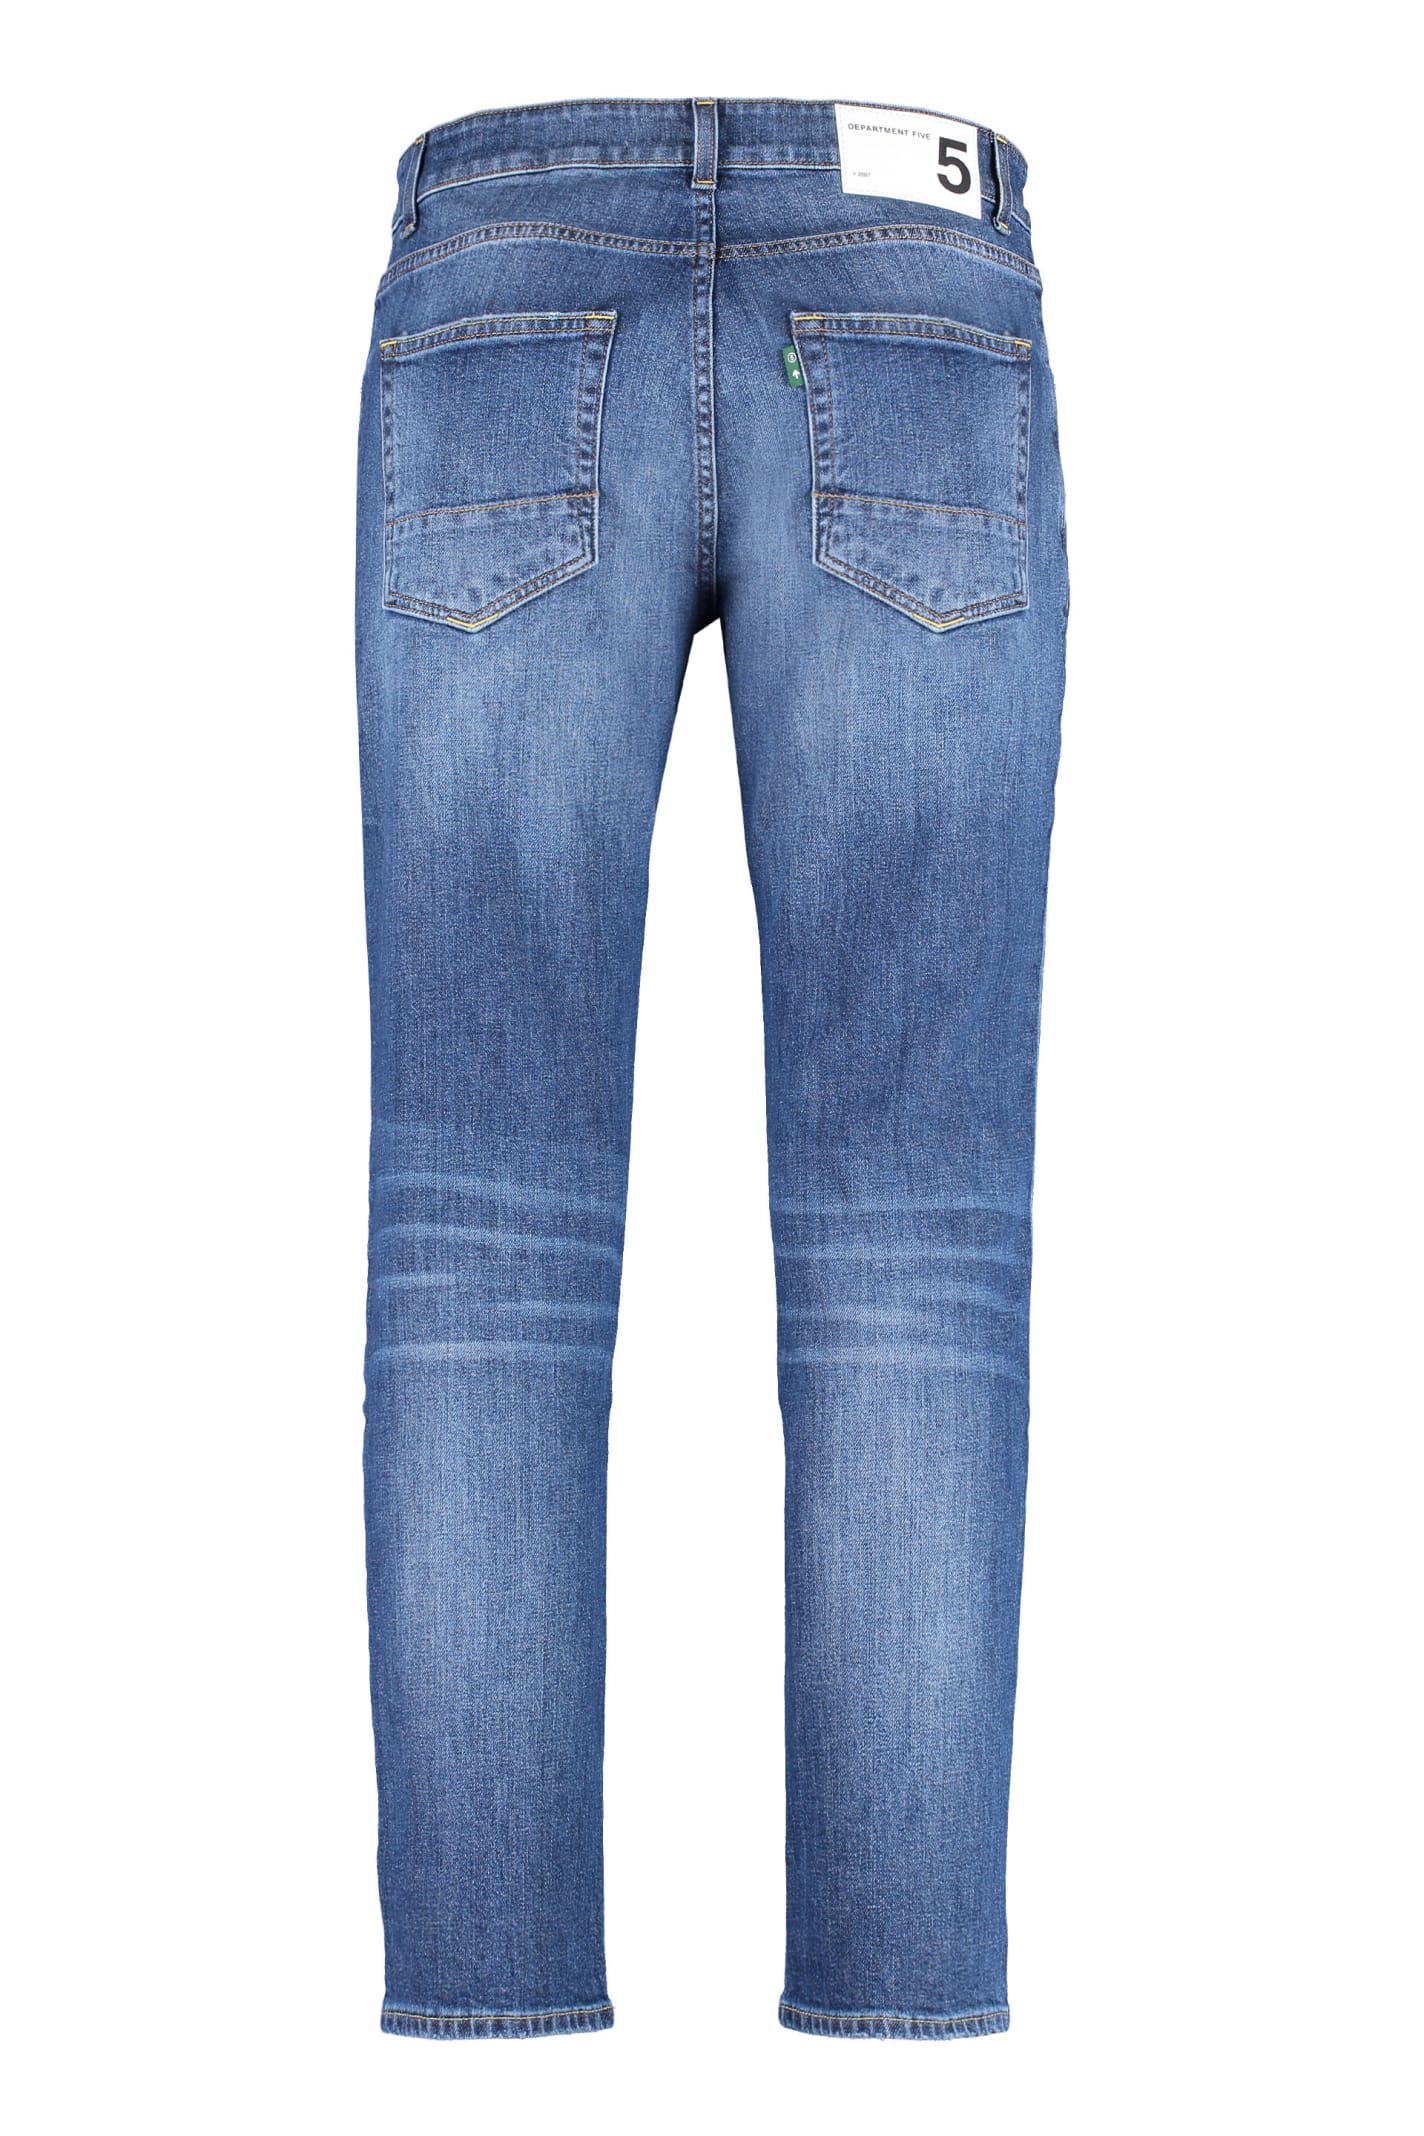 Shop Department Five Corkey Slim Fit Jeans In Denim